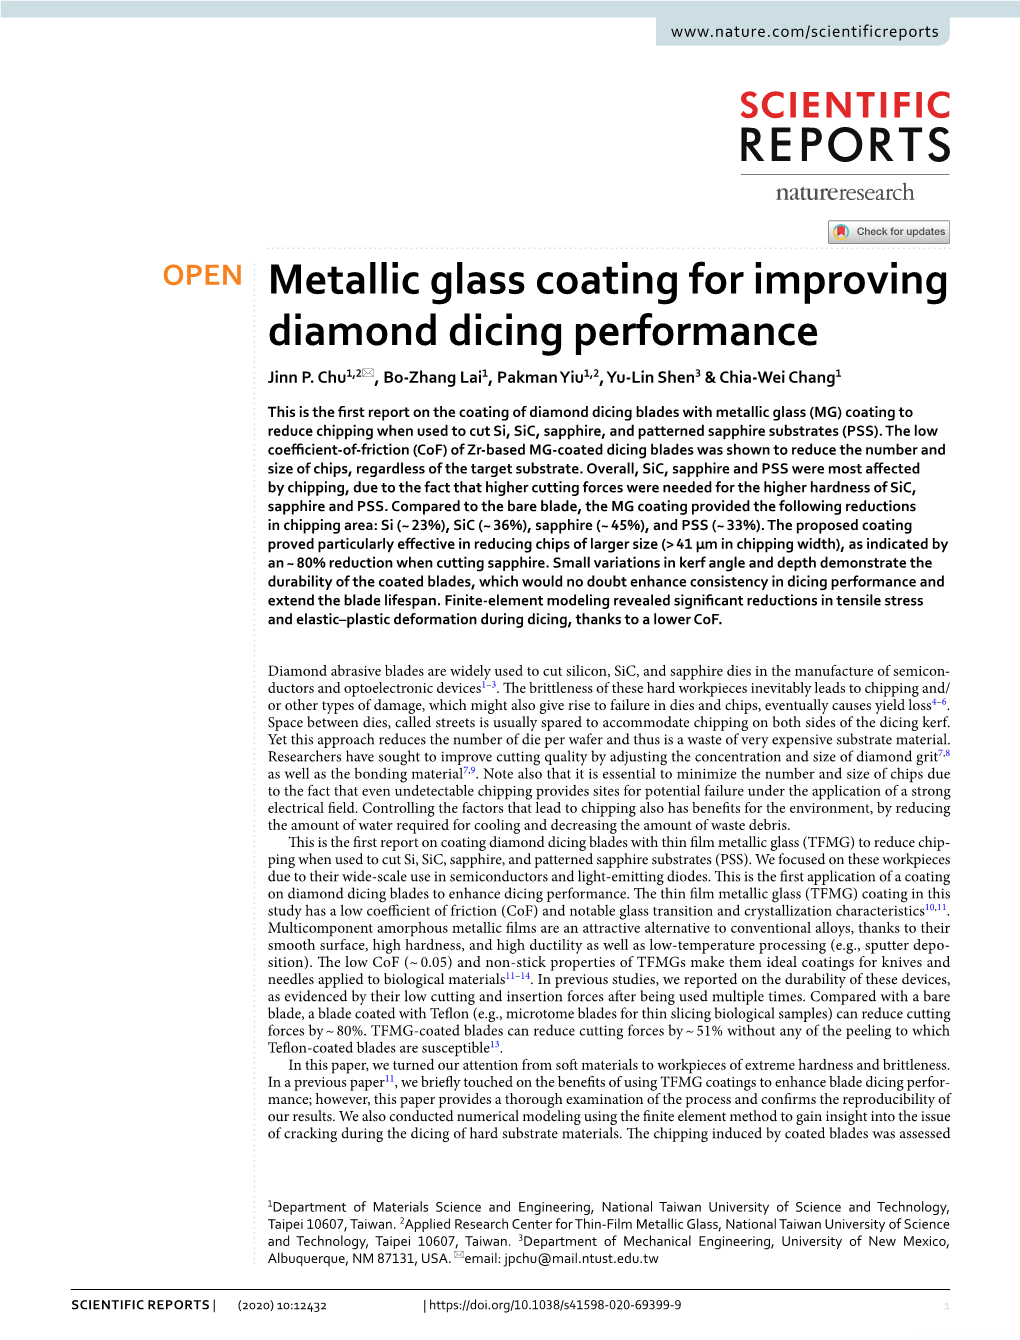 Metallic Glass Coating for Improving Diamond Dicing Performance Jinn P